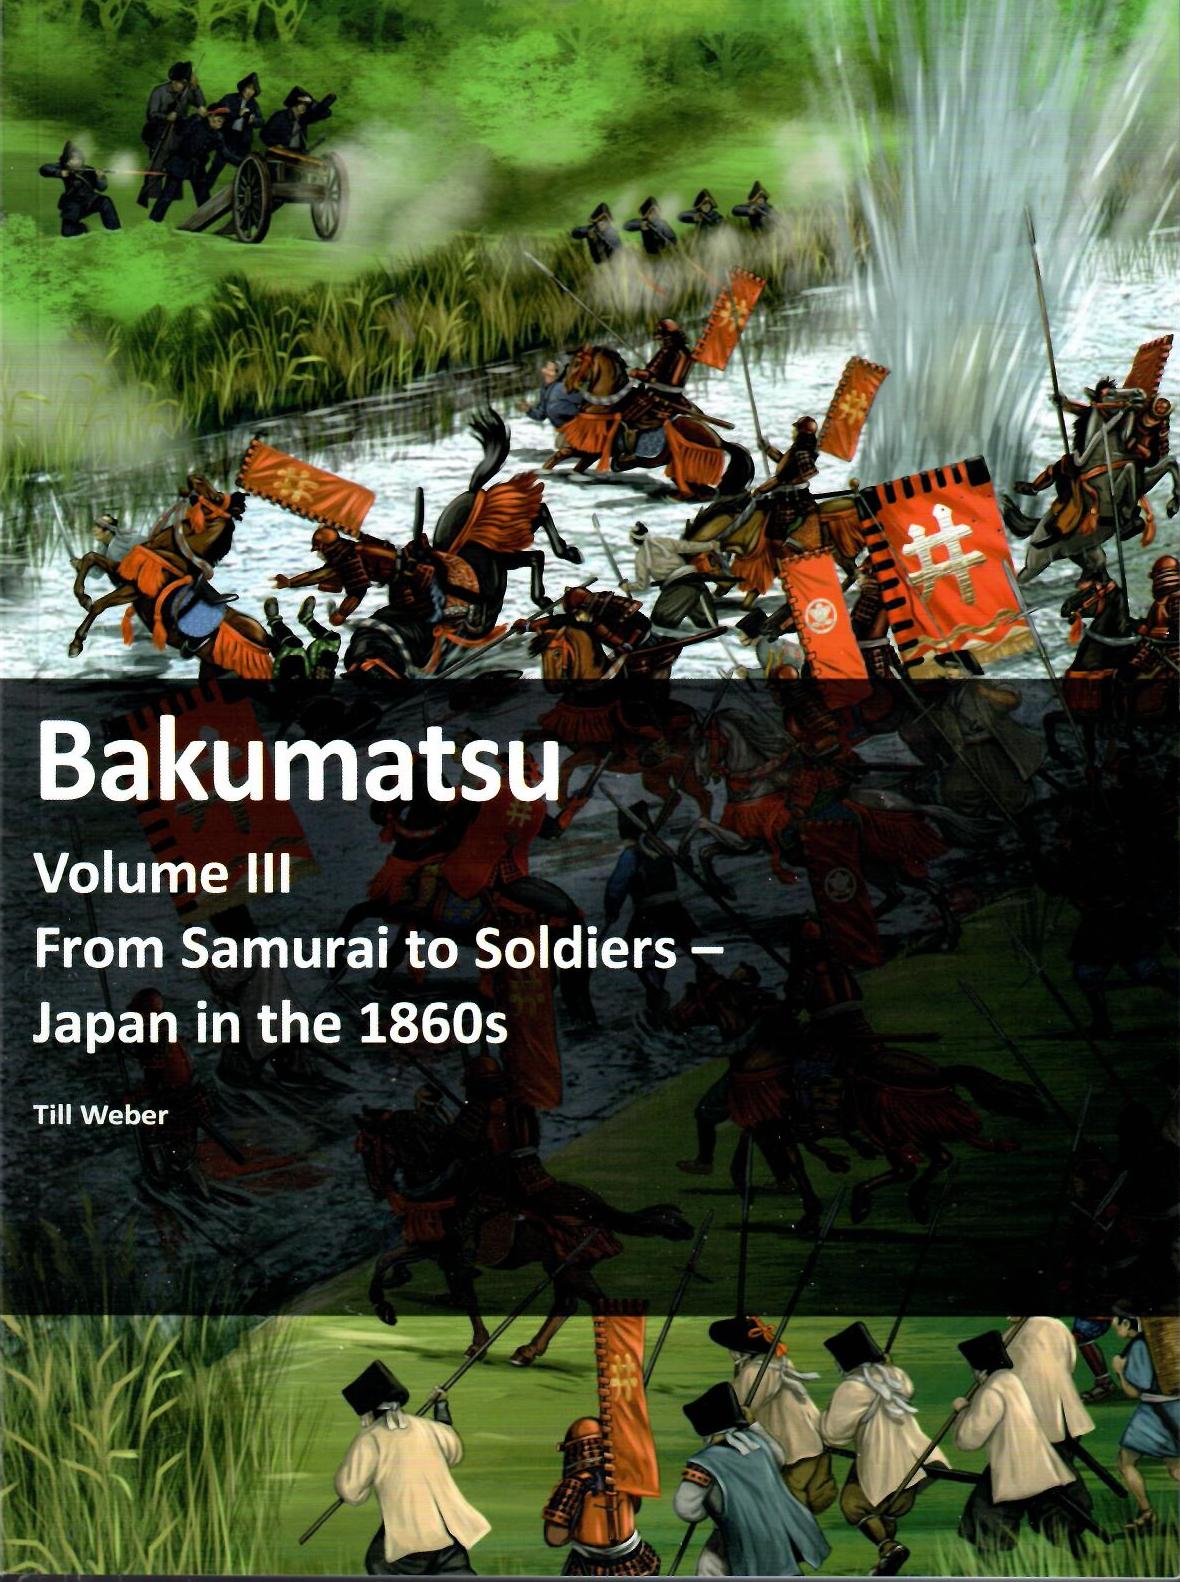 Bakumatsu. Volume III from Samurai to Soldiers – Japan in the 1860s